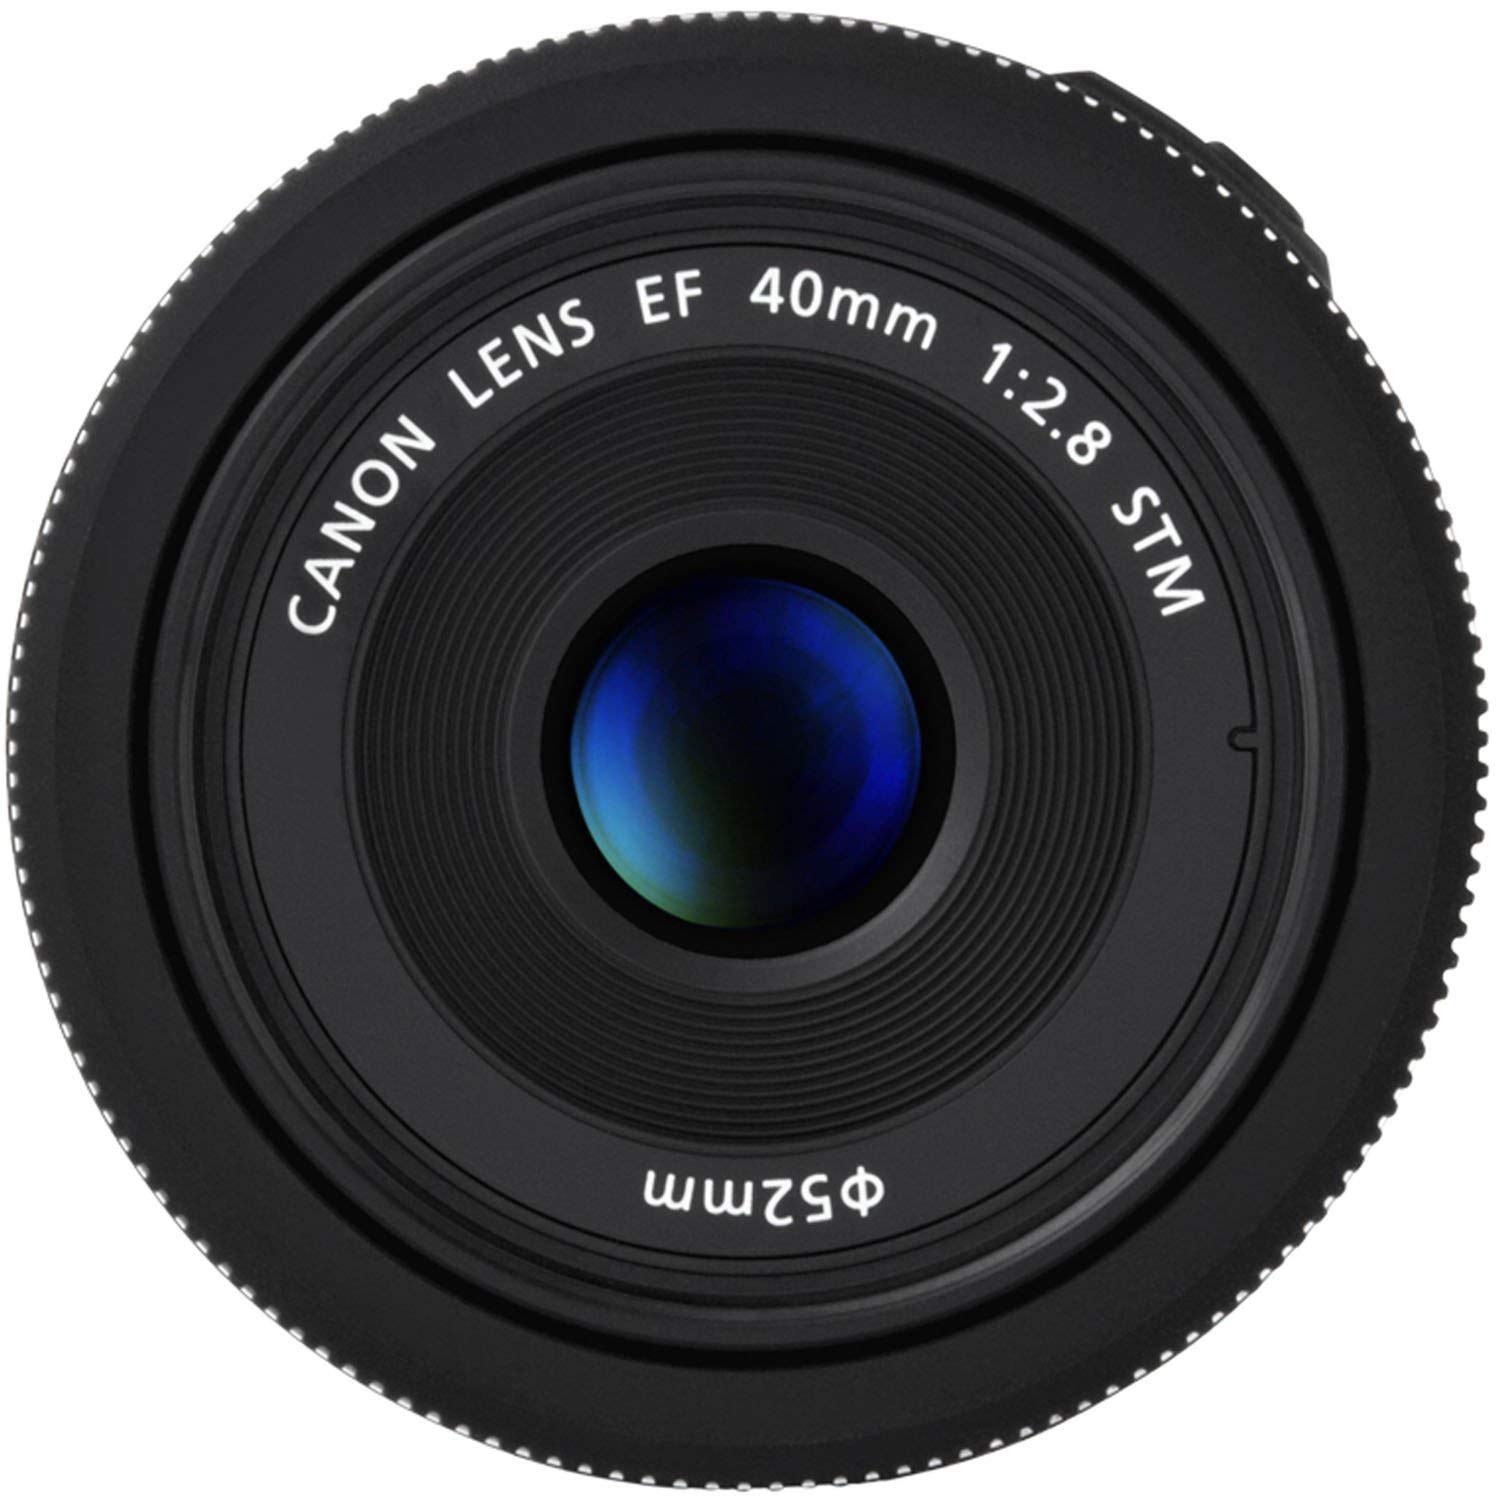 Amazon.com : Canon EF 40mm f/2.8 STM Lens - Fixed : Camera Lenses ...